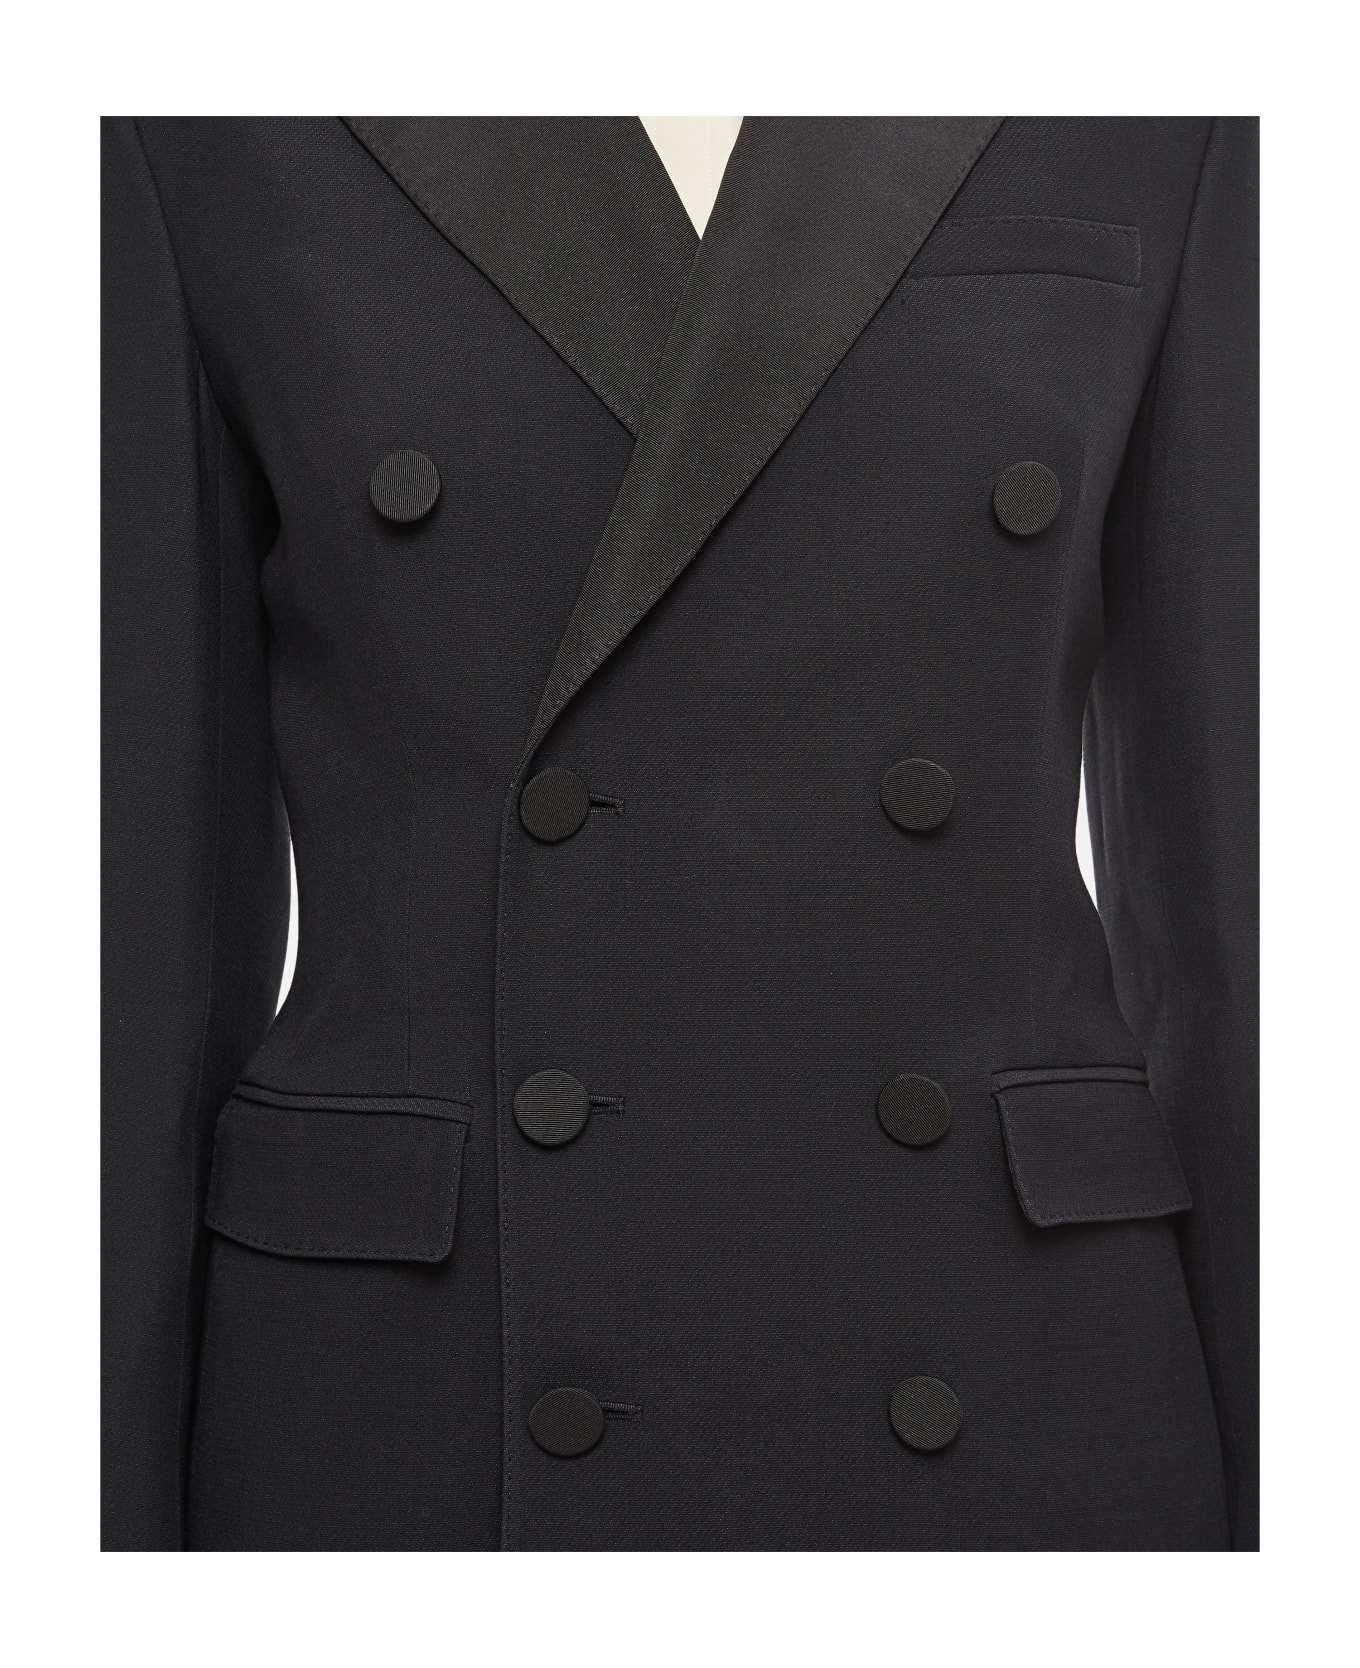 Ralph Lauren Long Sleeve Cocktail Dress - Black レインコート